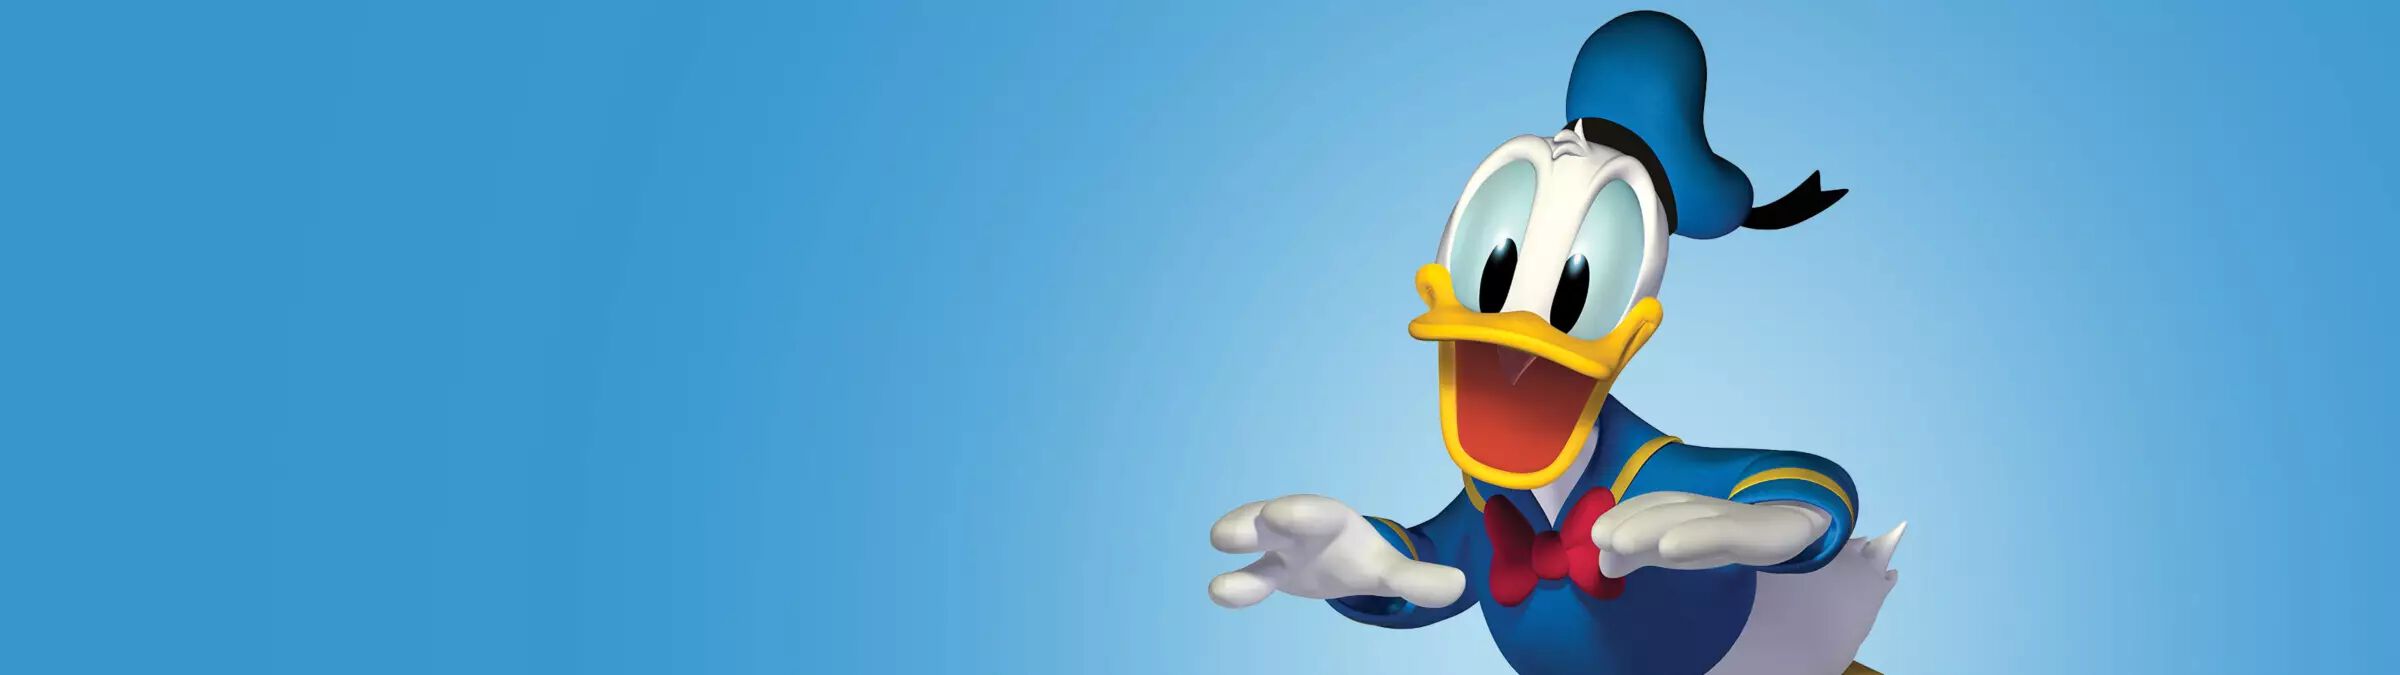 Donald Duck Character Banner